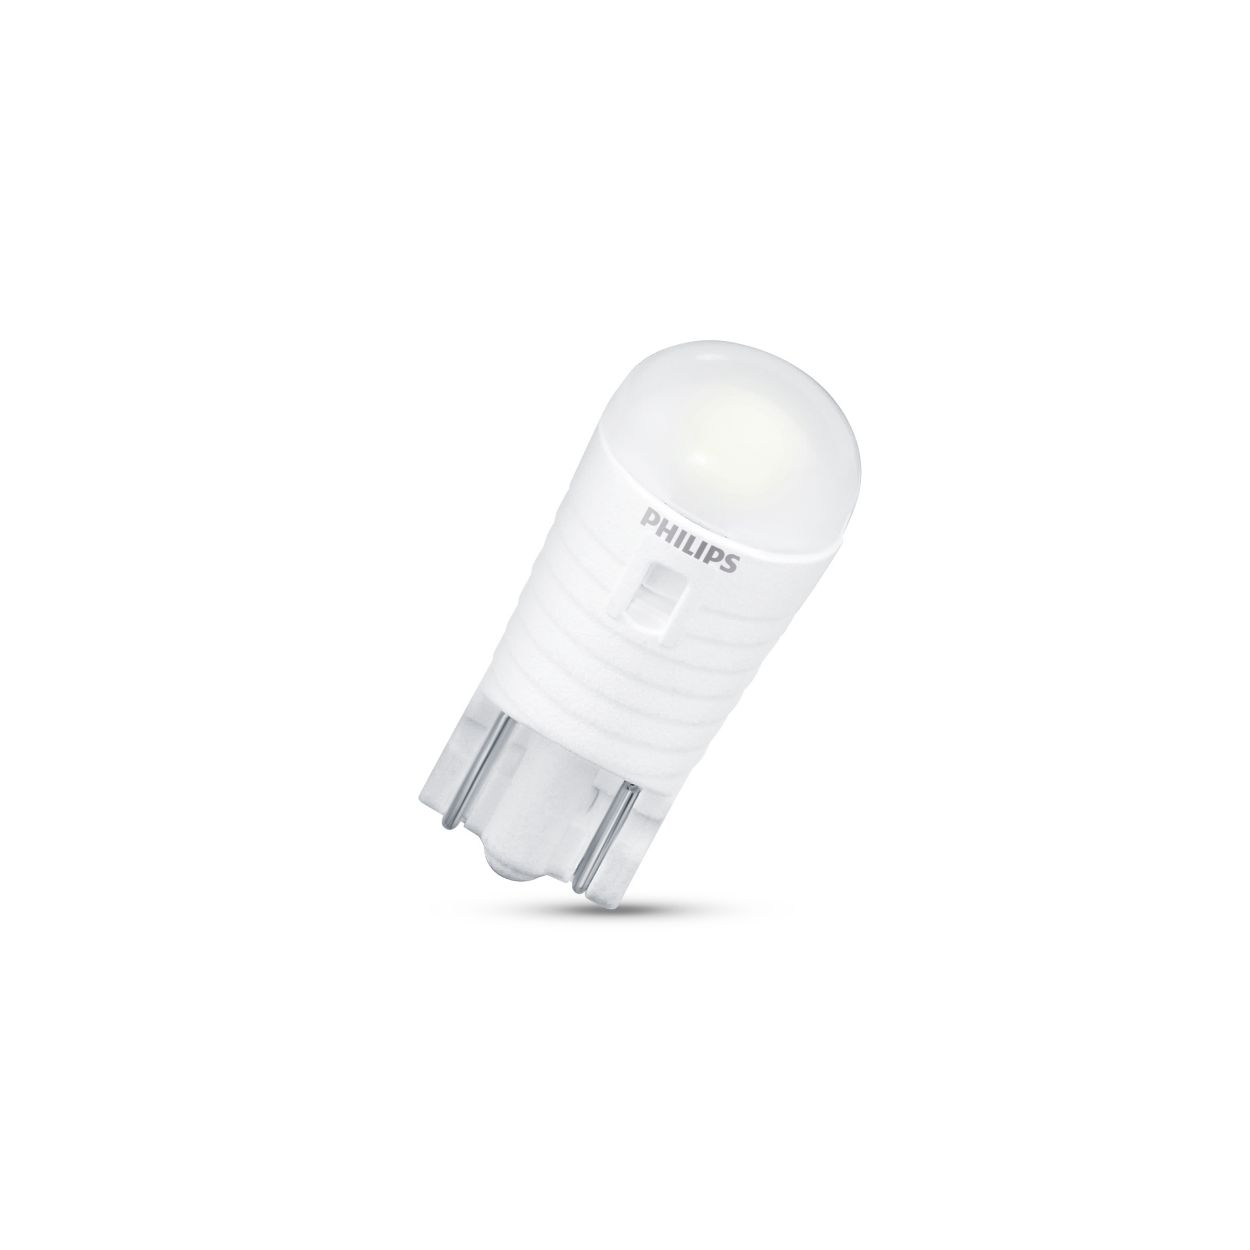 Philips Ultinon Pro3000 Cool White LED W21W (Twin) Car Bulbs